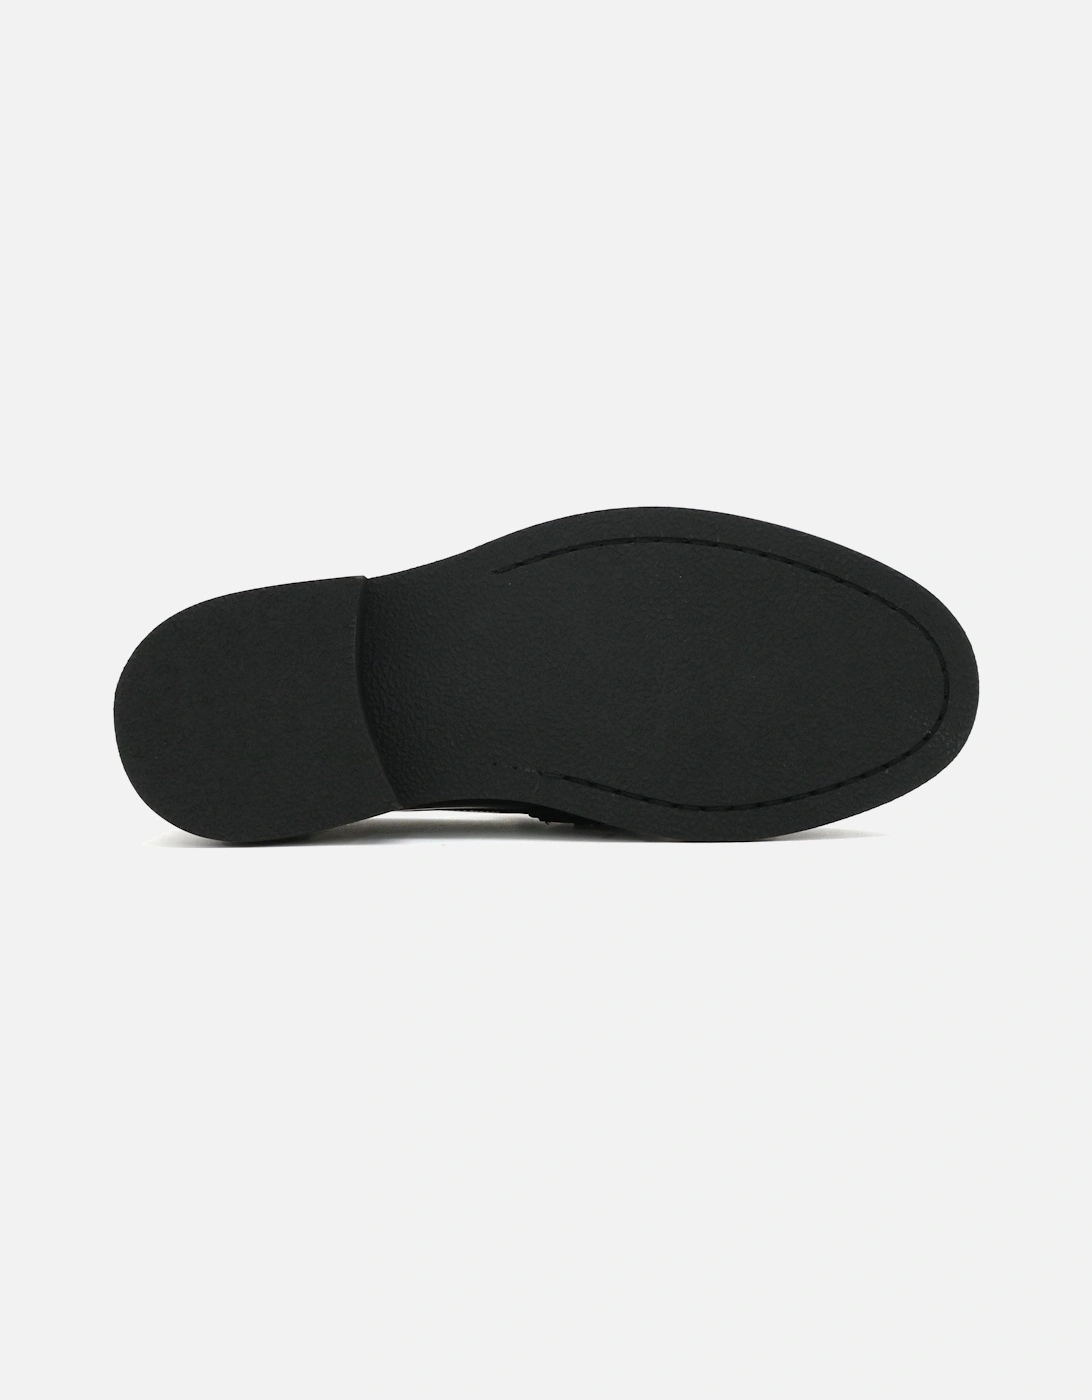 Chain Detail Black Loafer